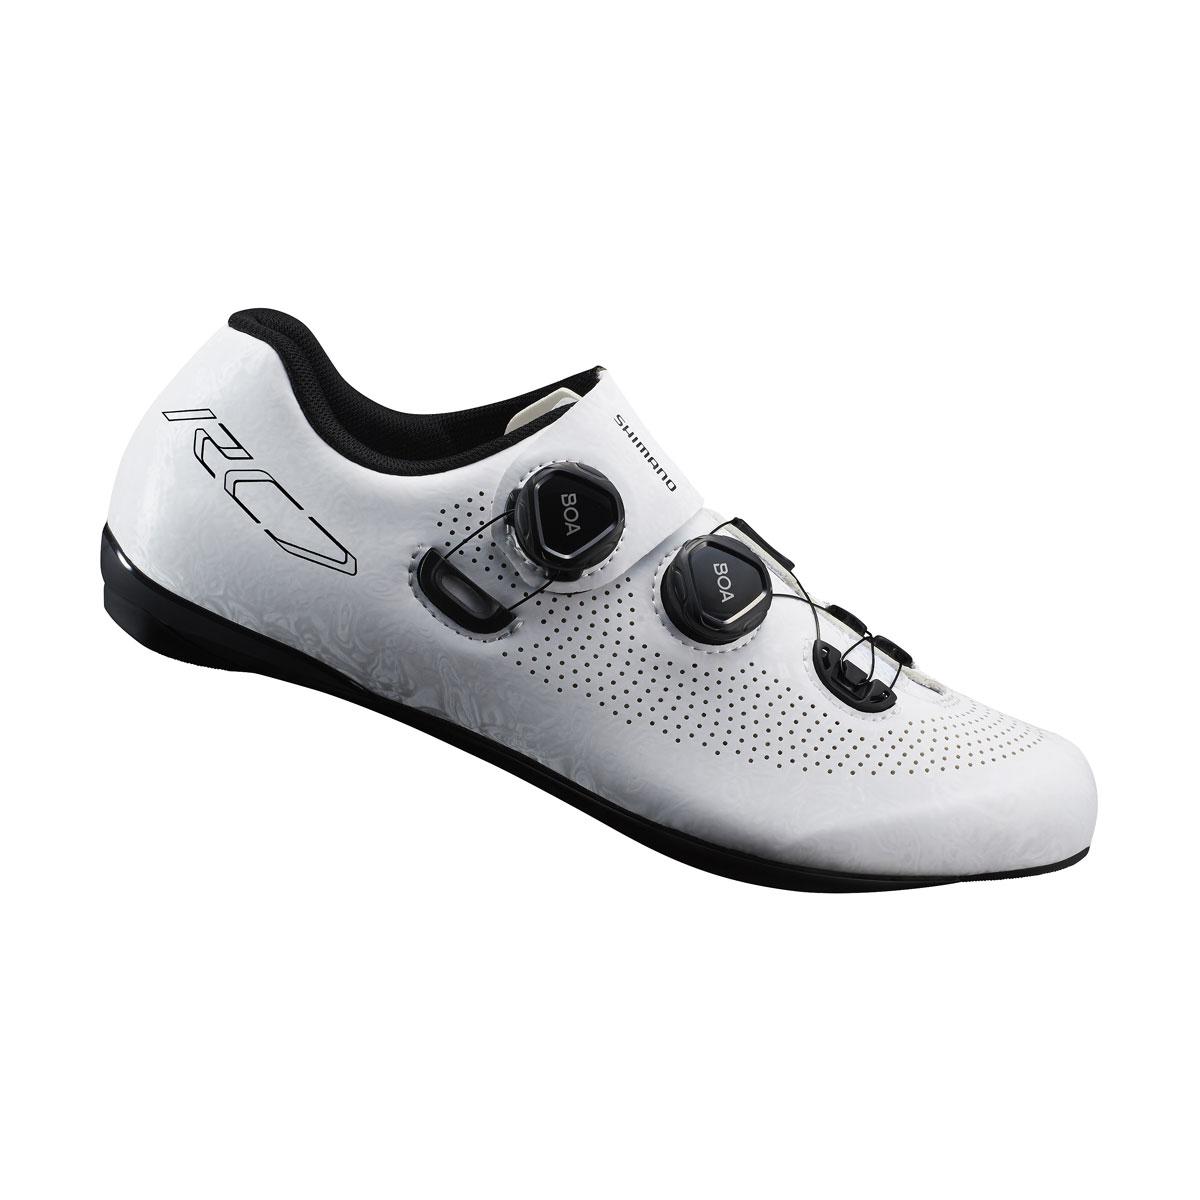 Shimano Me4 Mountain Bike Boa MTB Cycling Shoes Black Sh-me400-43 Men for sale online us 8.9 